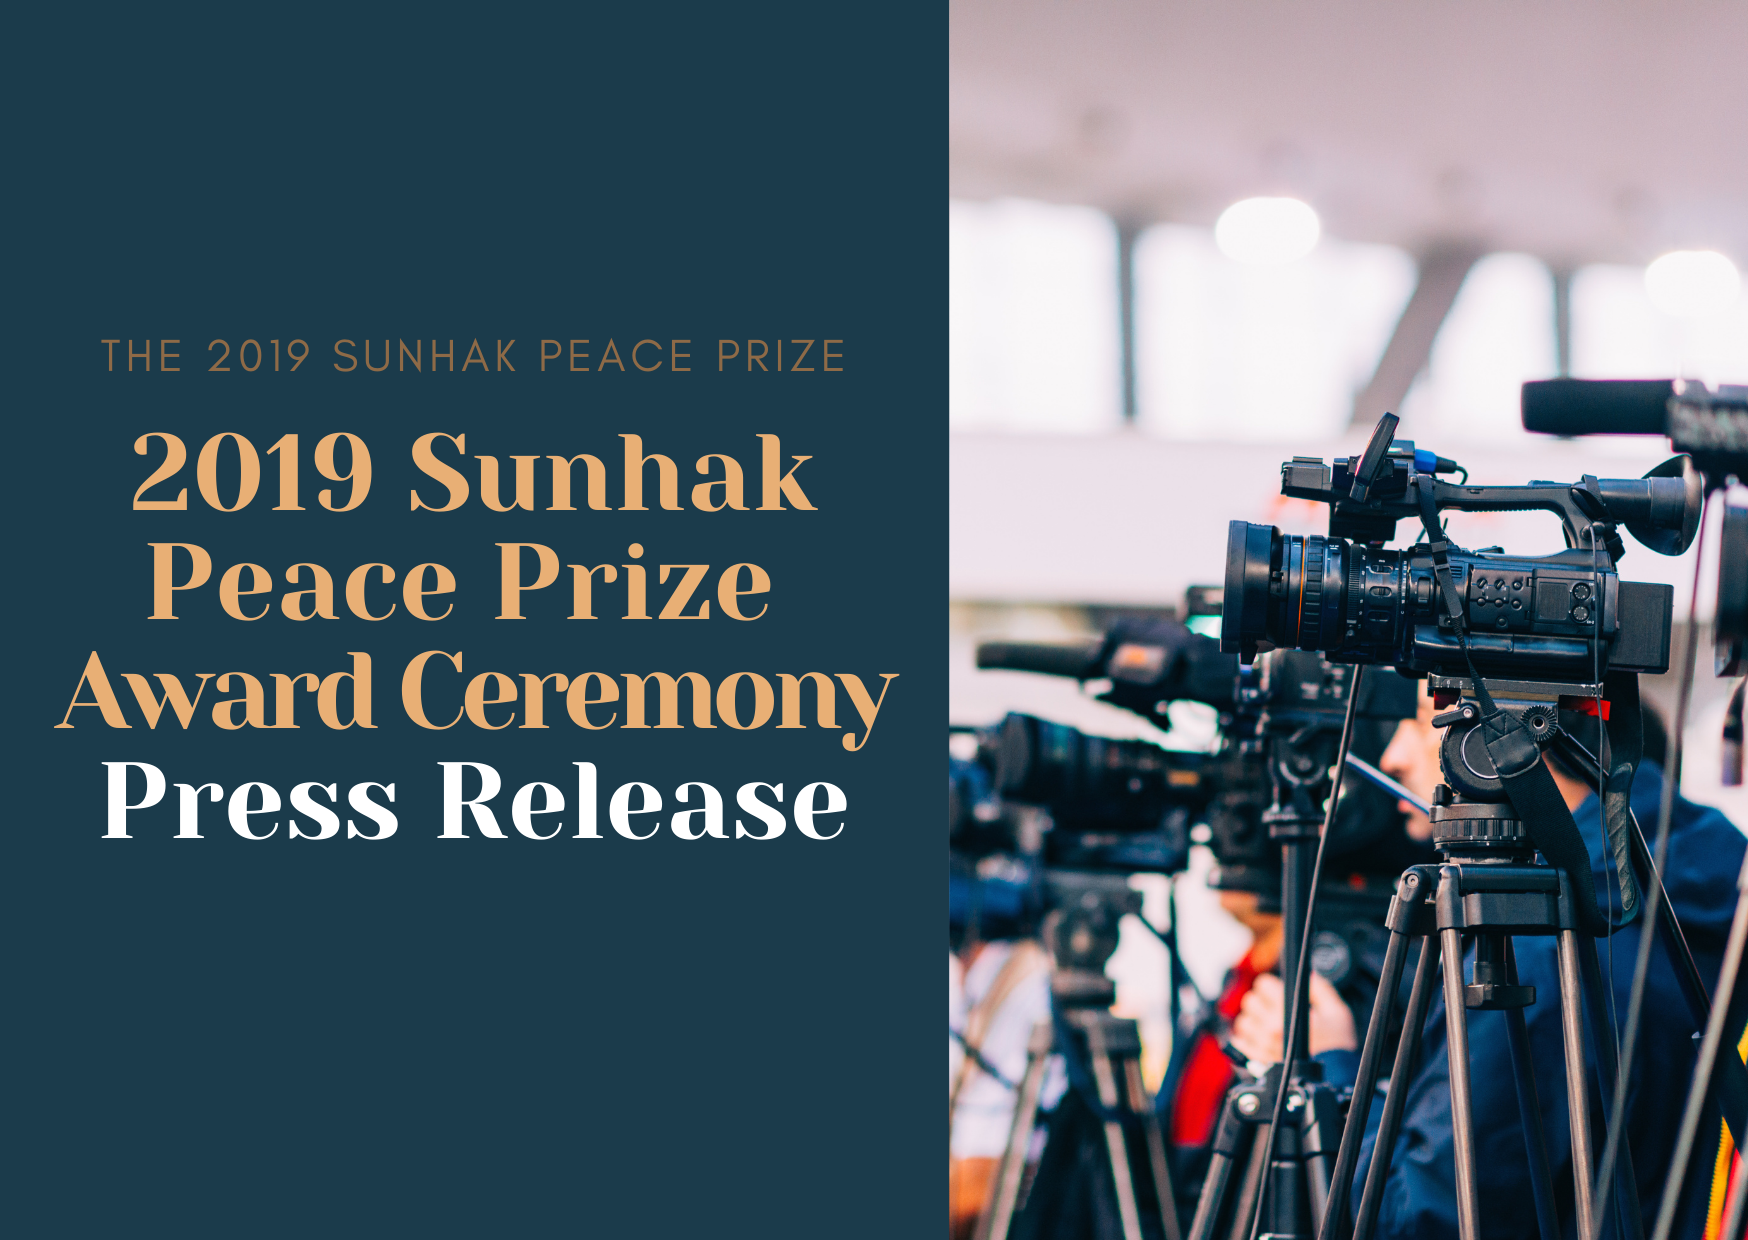 [Press Release] The Sunhak Peace Prize for 2019 Convened in Seoul, South Korea Awarding Akinwumi Ade 썸네일